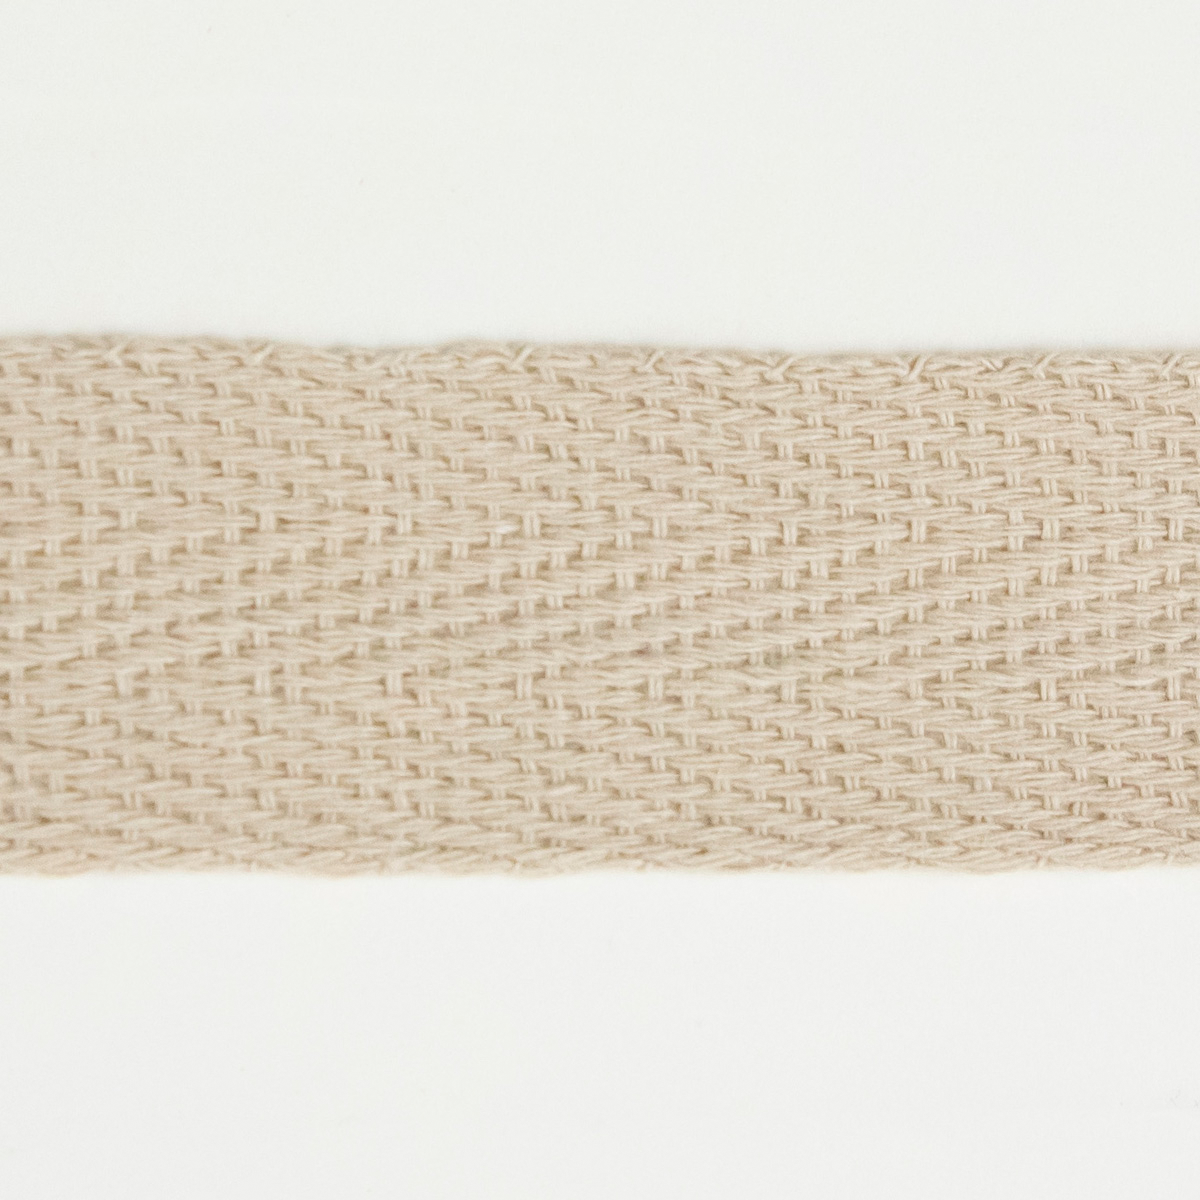 kurzes Textilband geklebt (20 mm breit)